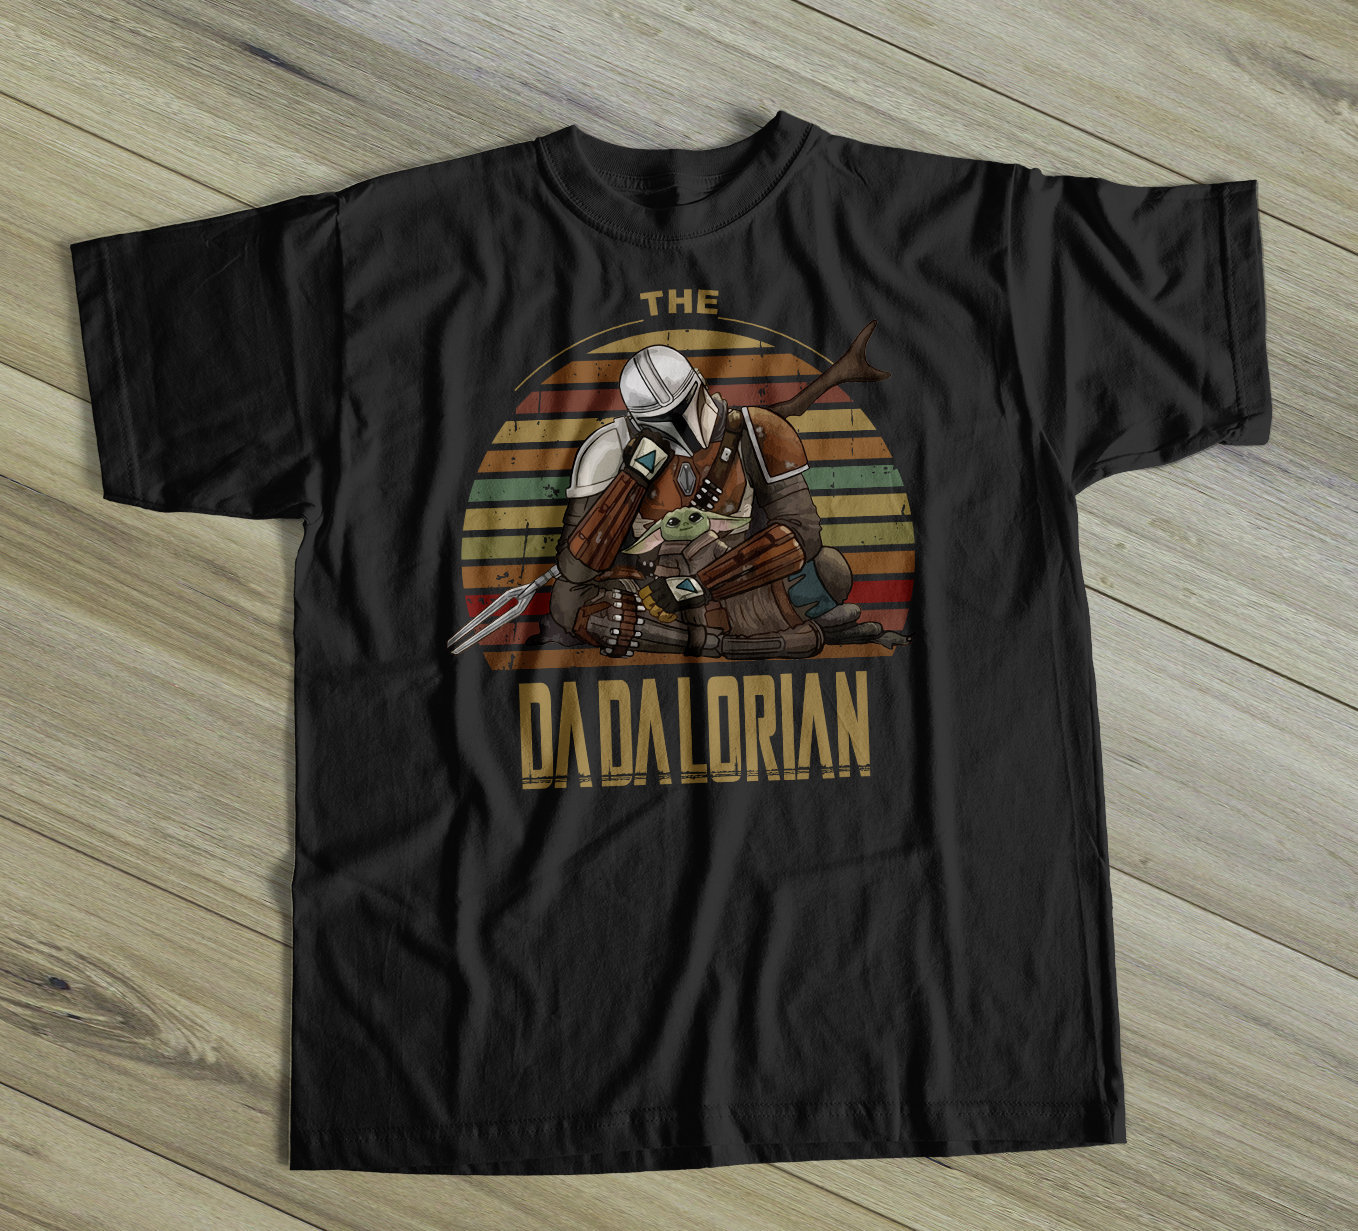 The-dadalorian-shirt-mandalorian-shirt-fathers-day-gift-gift-for-dad-fathers-day-shirts-dad-superhero-shirt-star-wars-shirtdaddy